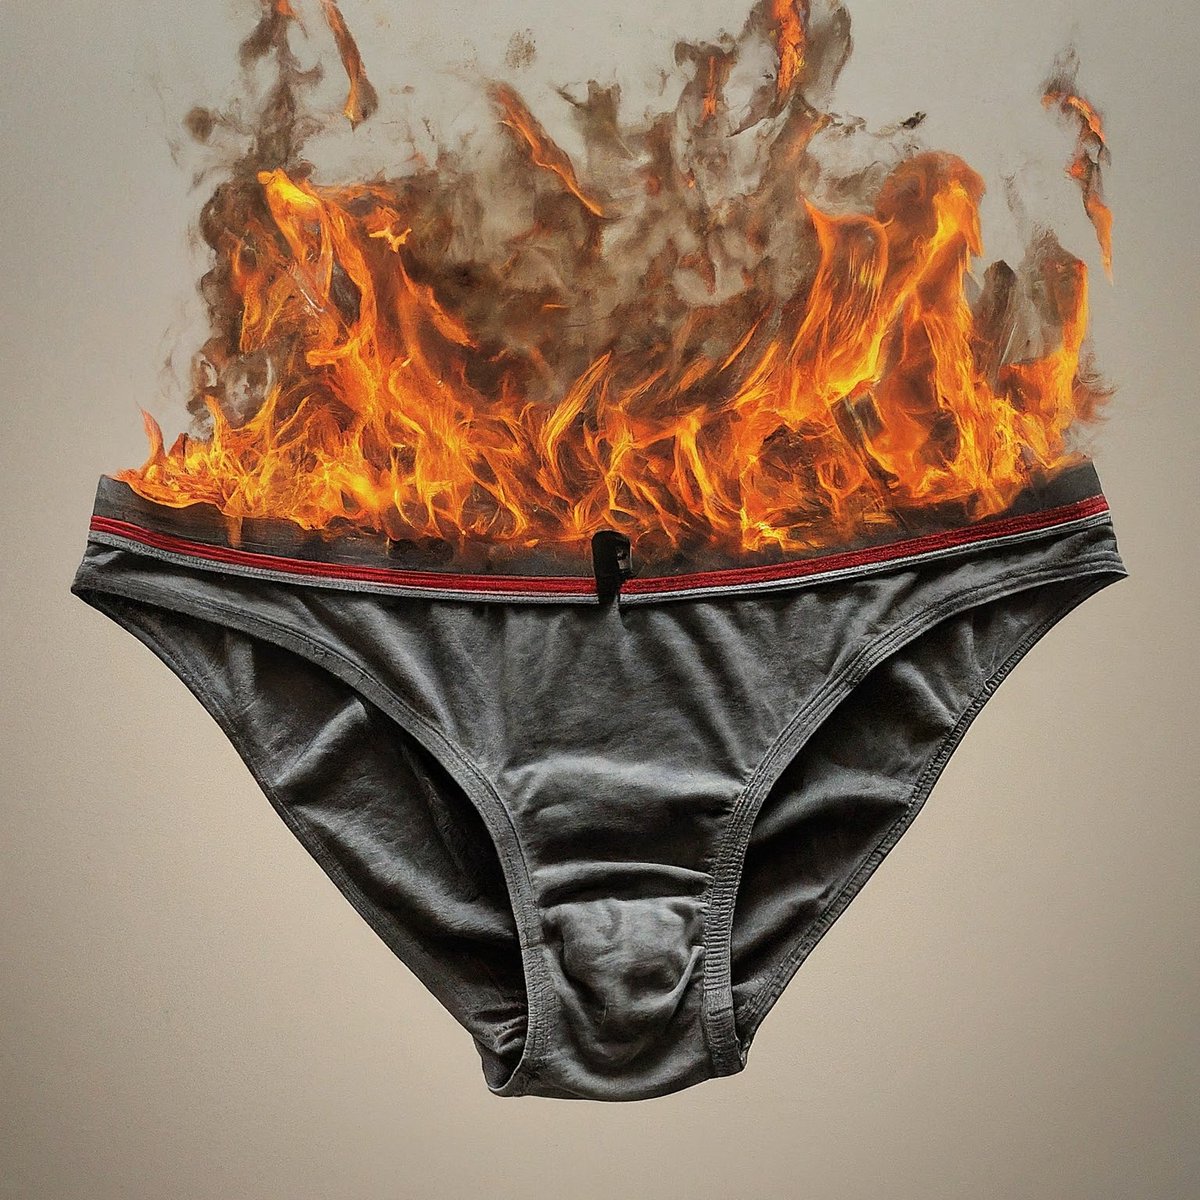 Burn your underwear

Support men's rights movement